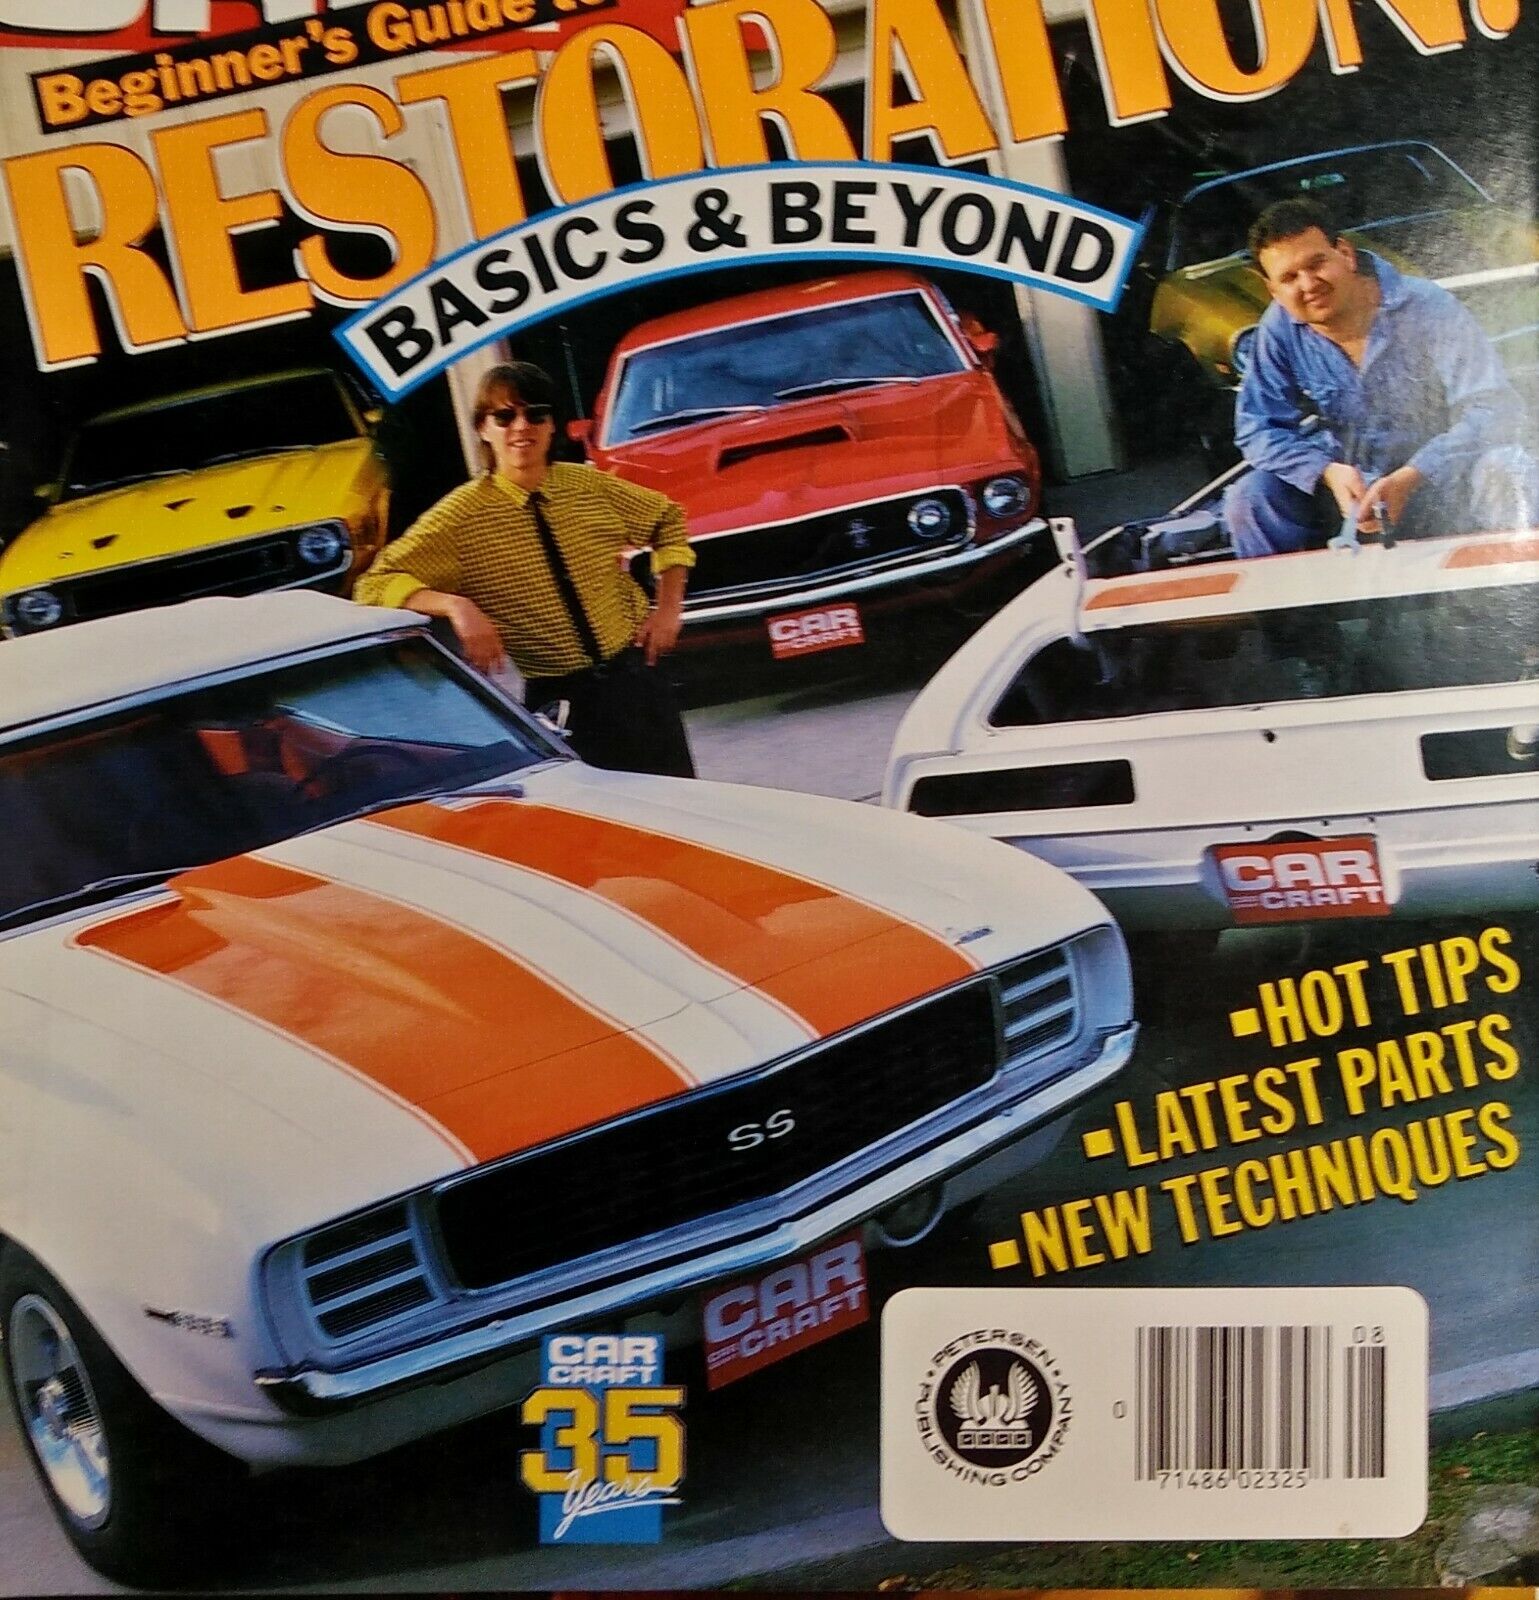 Car Craft Aug 1988 Vol 36 No 8 Big Block 460 Ford Beginners Guide Restoration 